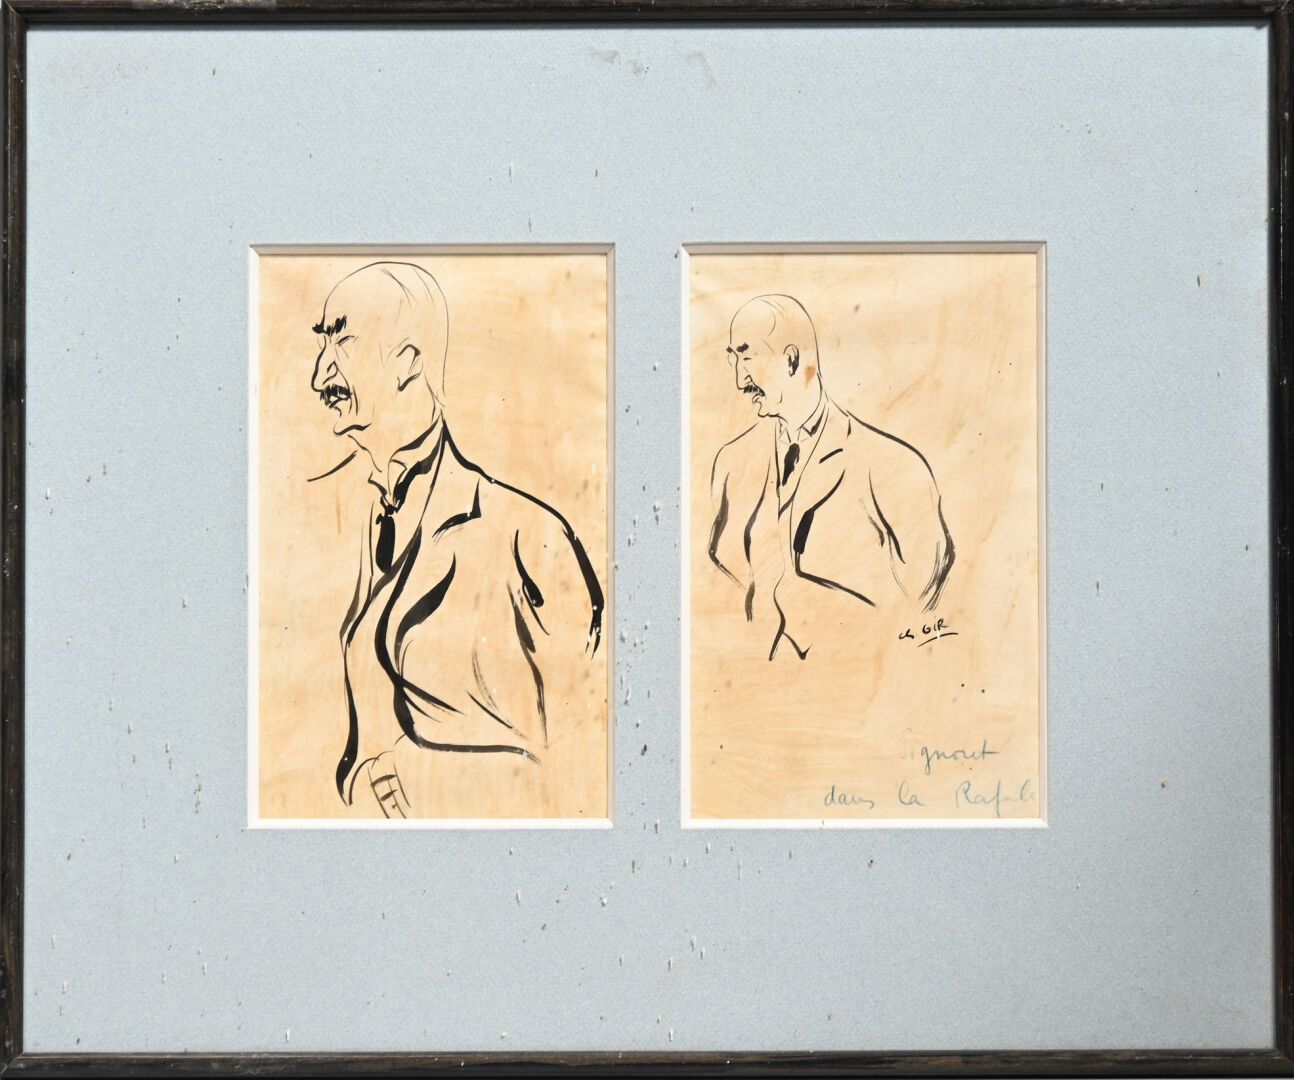 Null Charles Félix GIR (1883-1941) 三幅画。 

"Signoret dans la rafale" 纸上水墨画，有签名和注解&hellip;